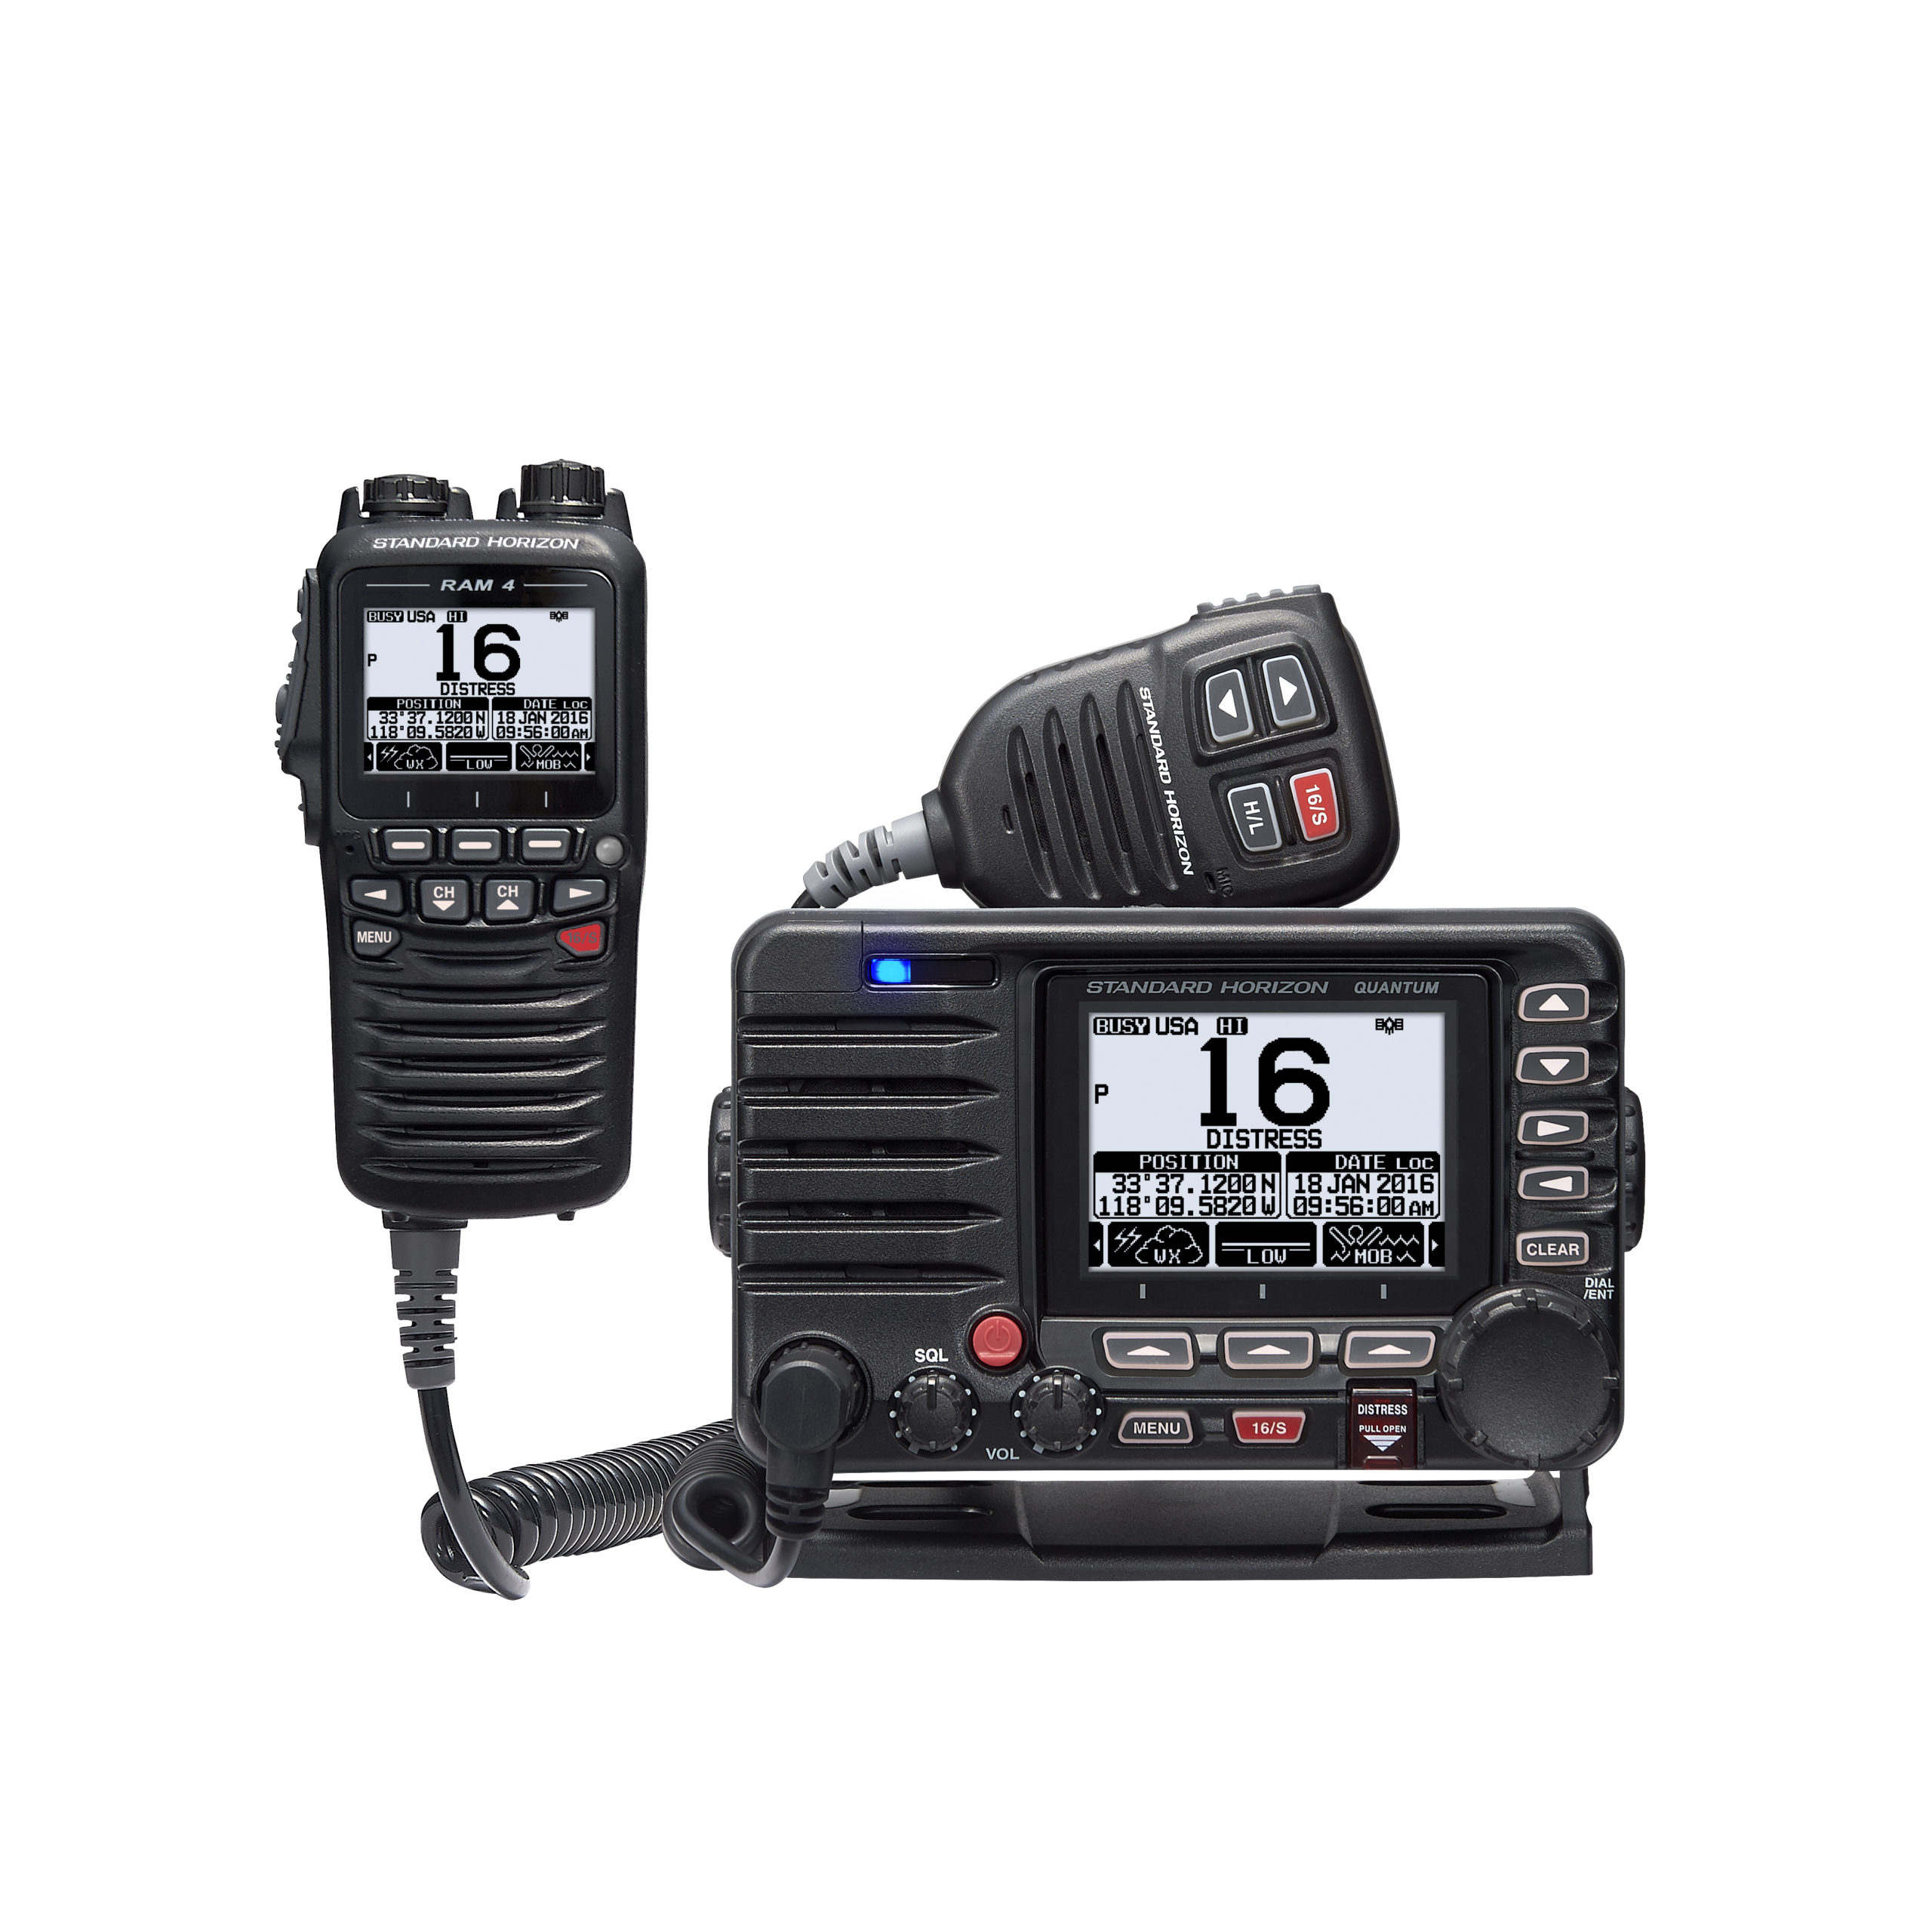 VHF w Hailer, GPS, AIS Receiver - 5